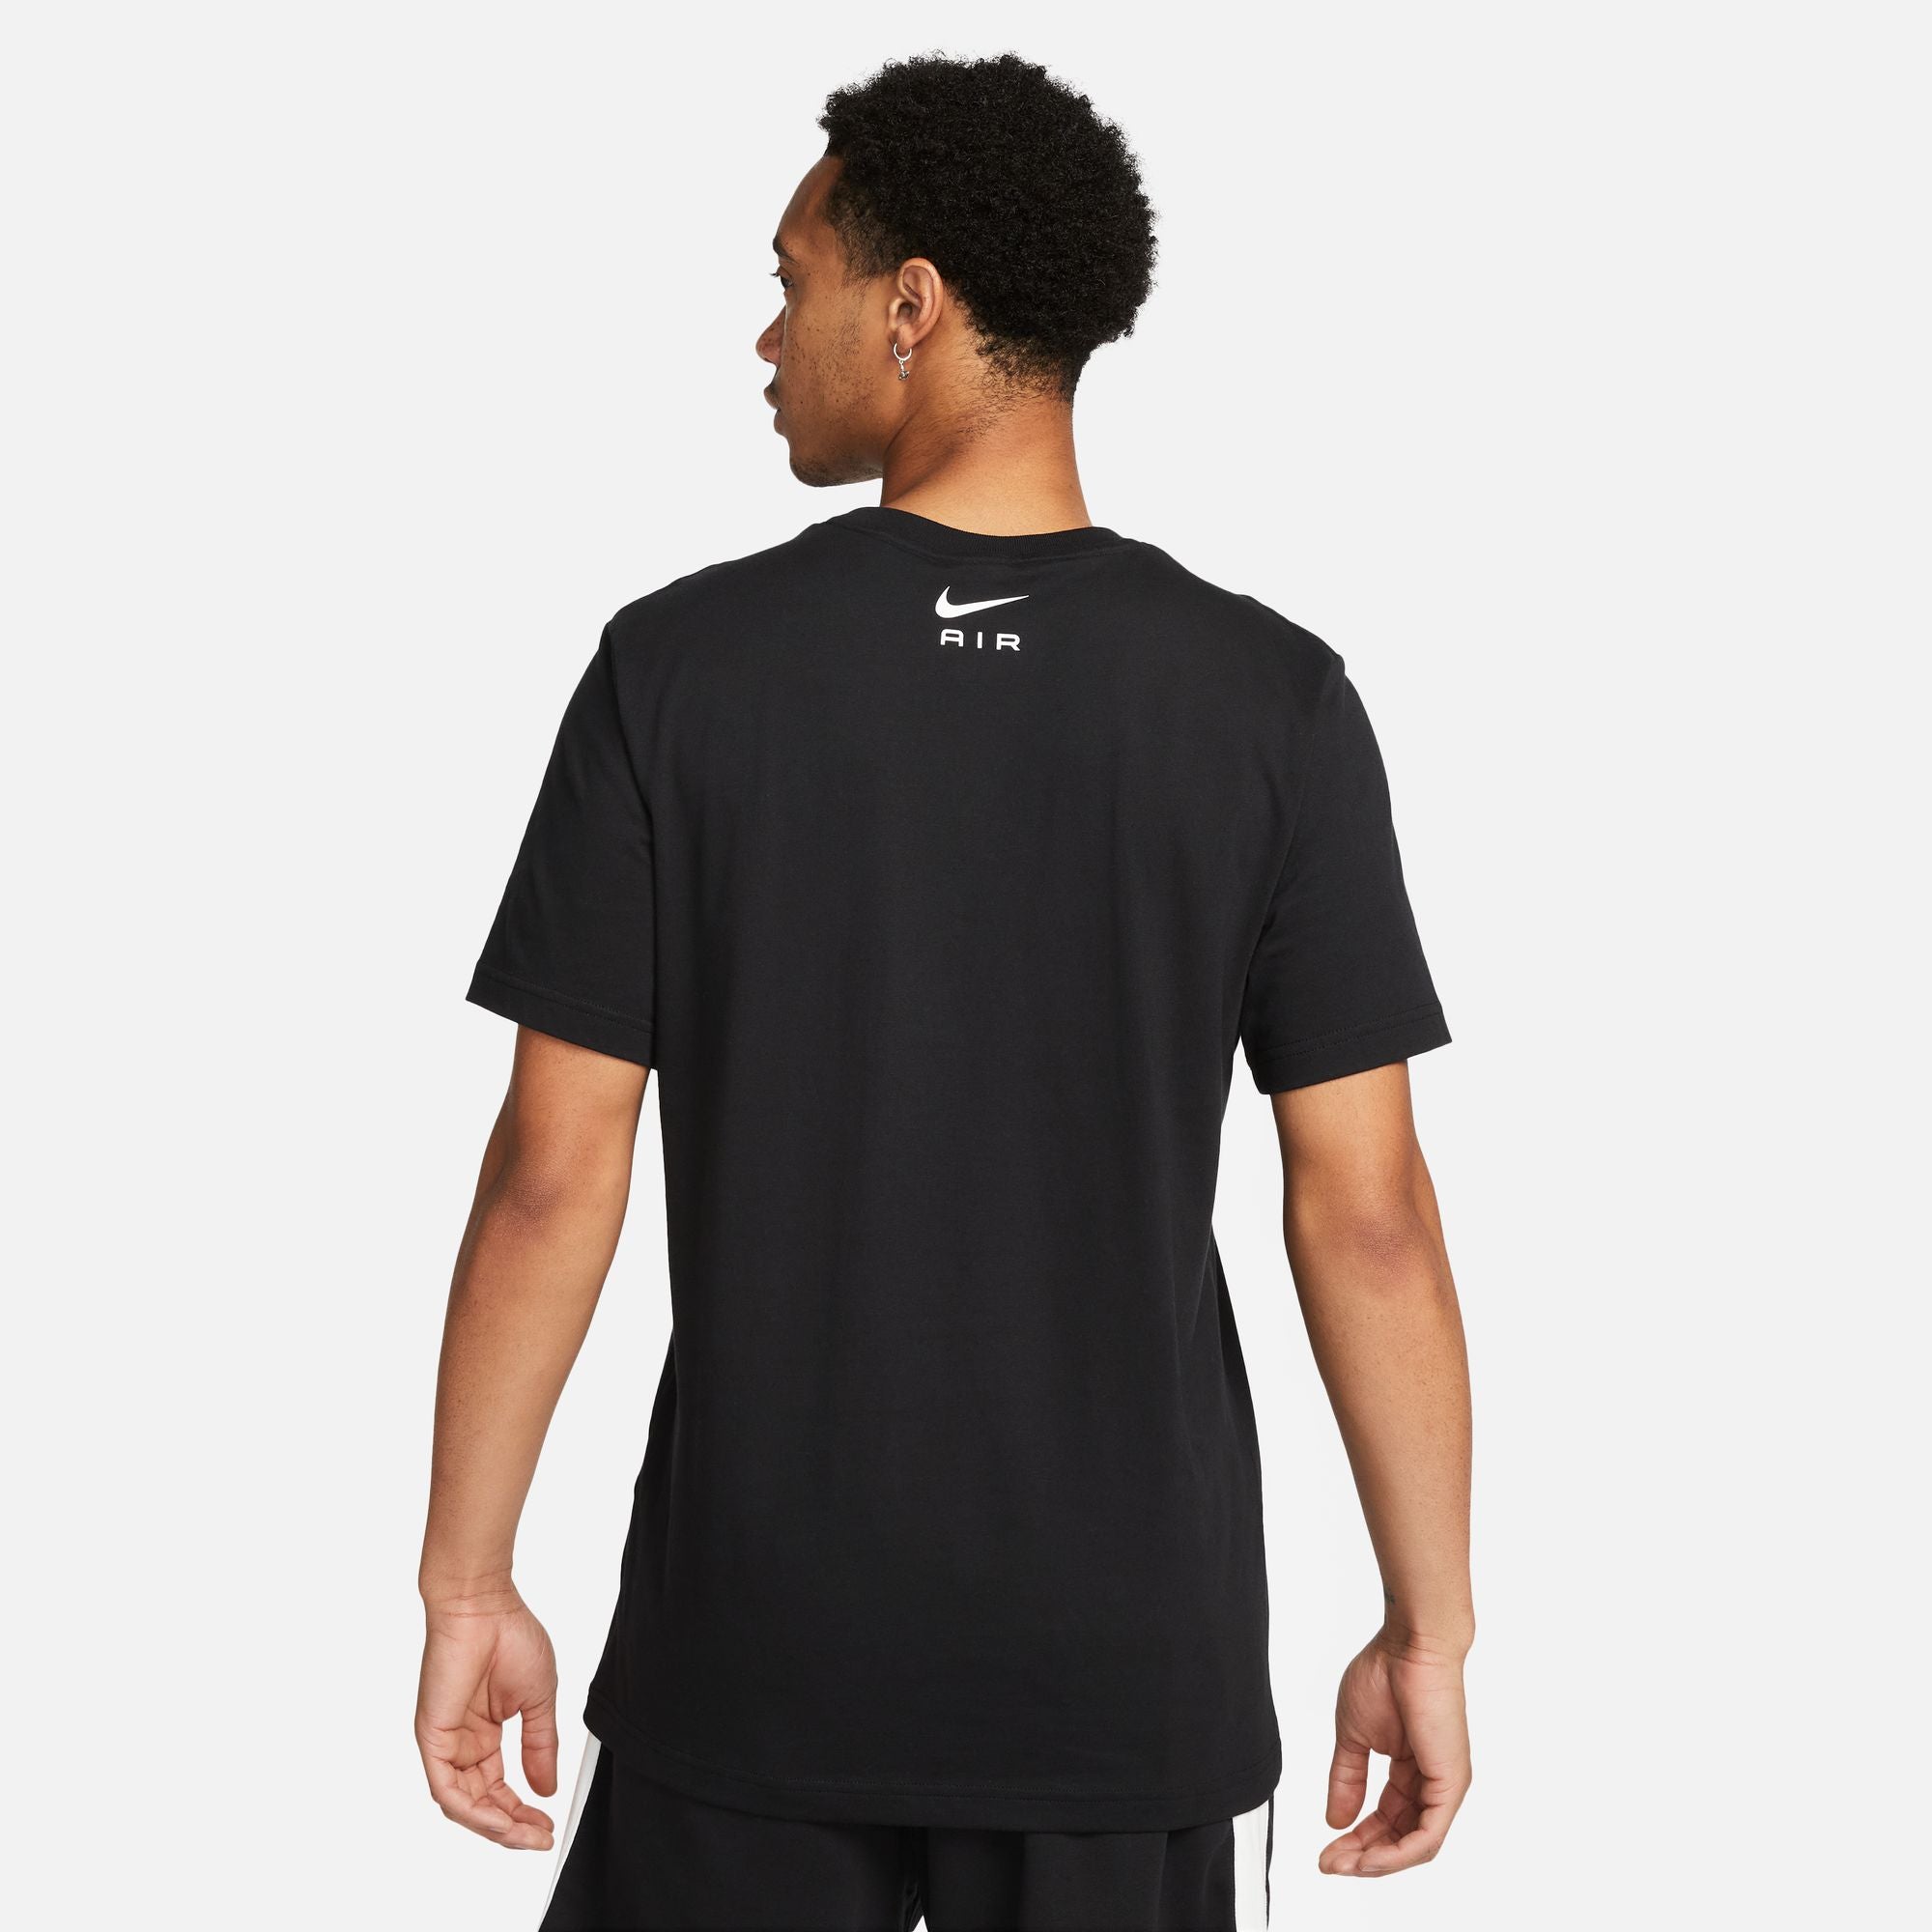 Nike Air Graphic T-shirt - Black/White